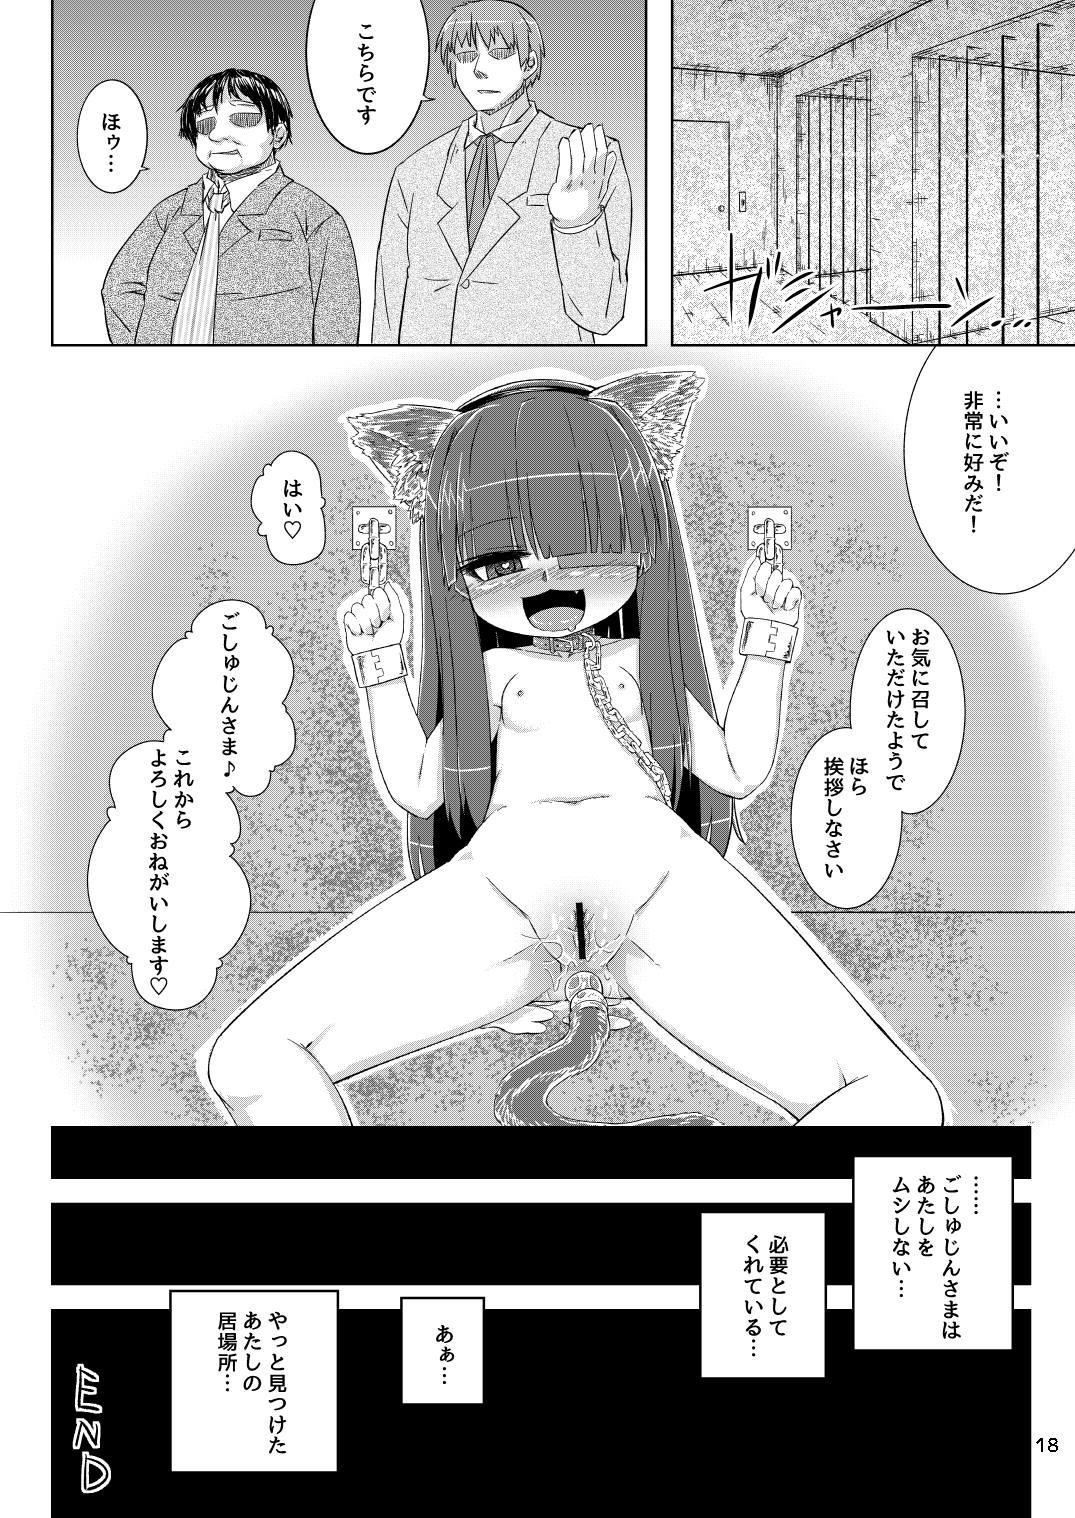 The Mirai-chan wa Biyaku nanka ni Makenain dakara! - Senran kagura Hot Wife - Page 19